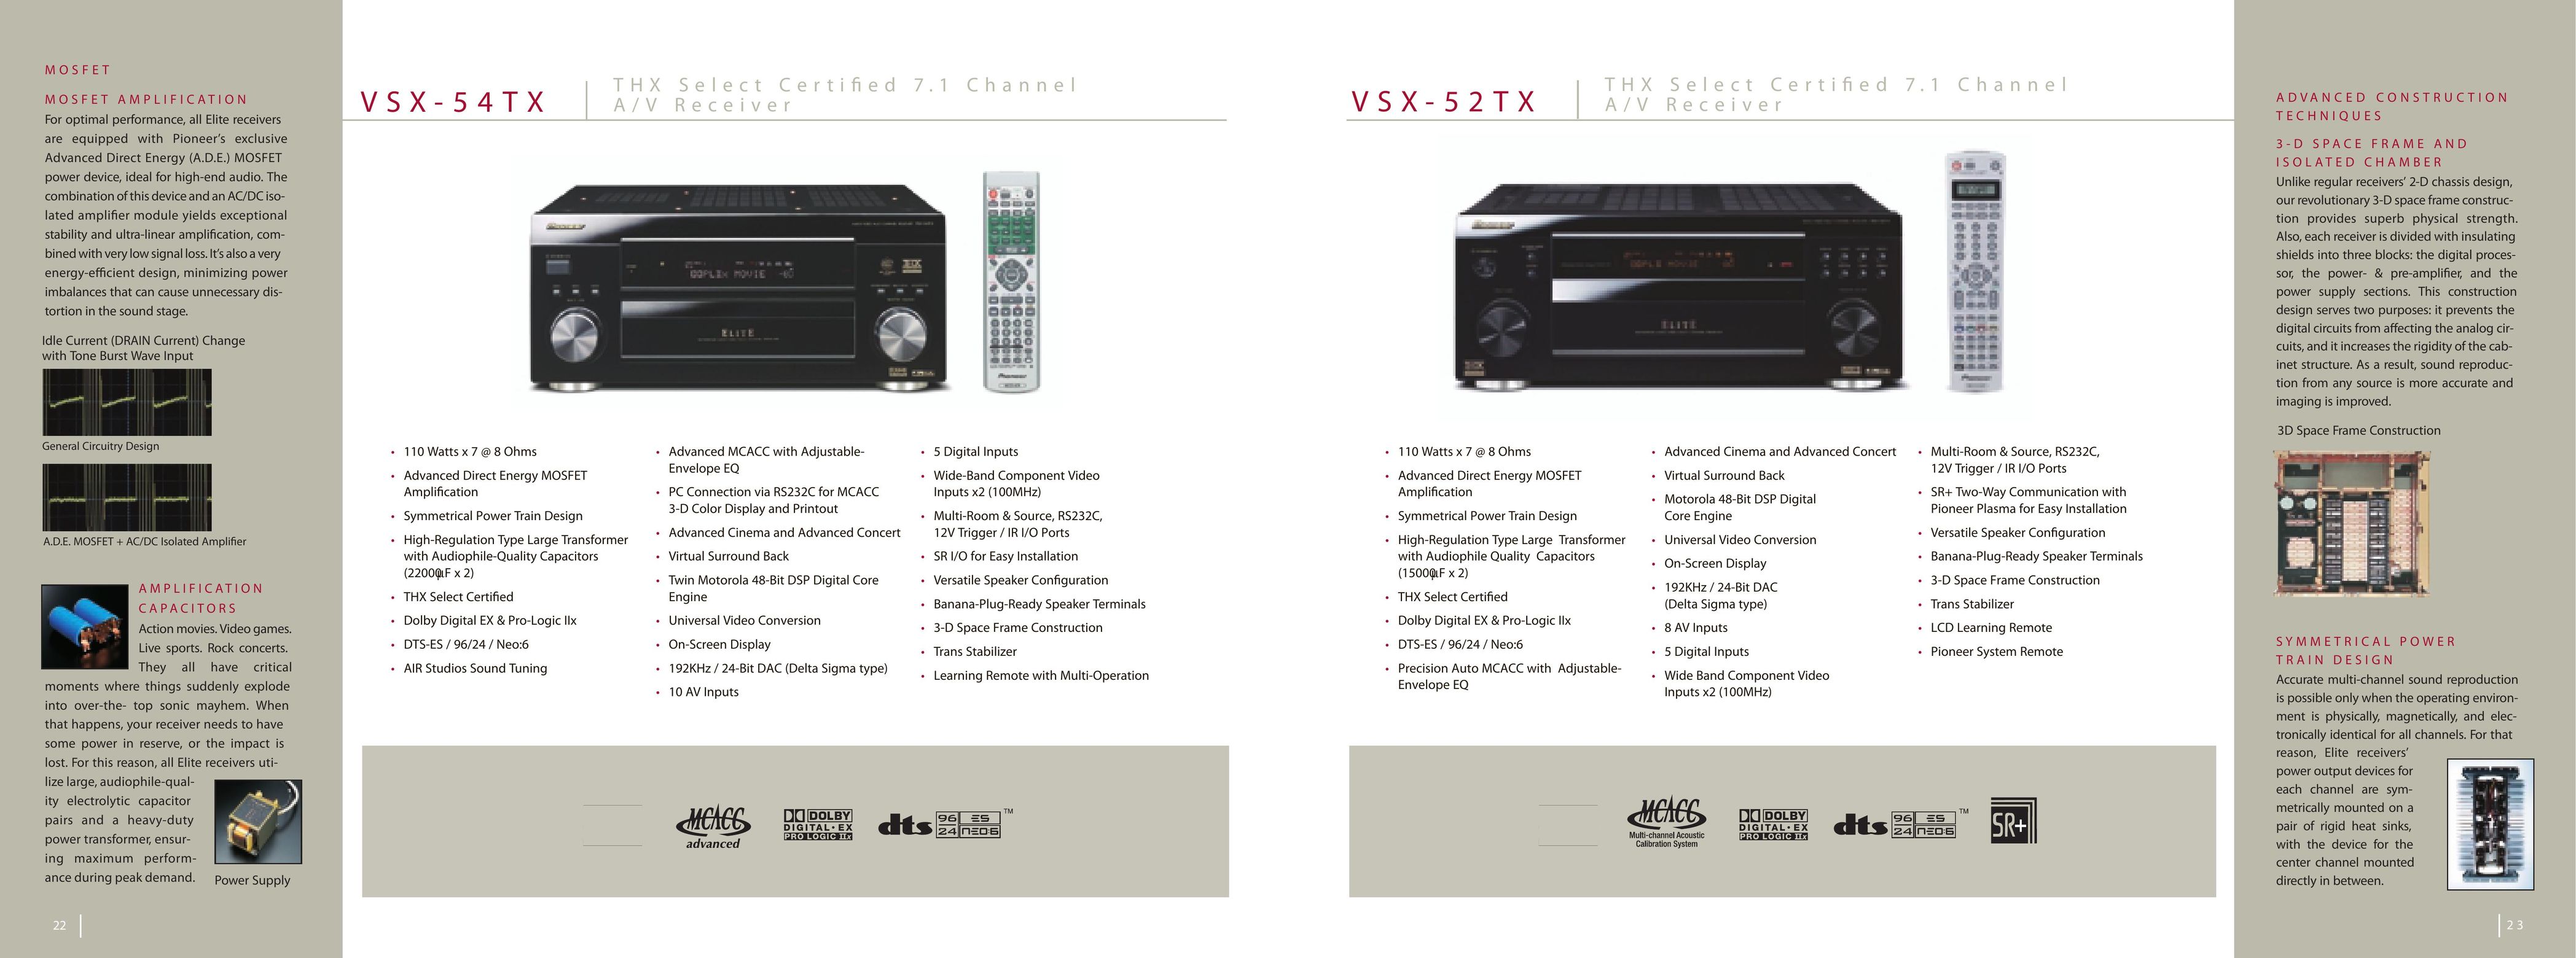 Pioneer VSX-54TX TV Receiver User Manual